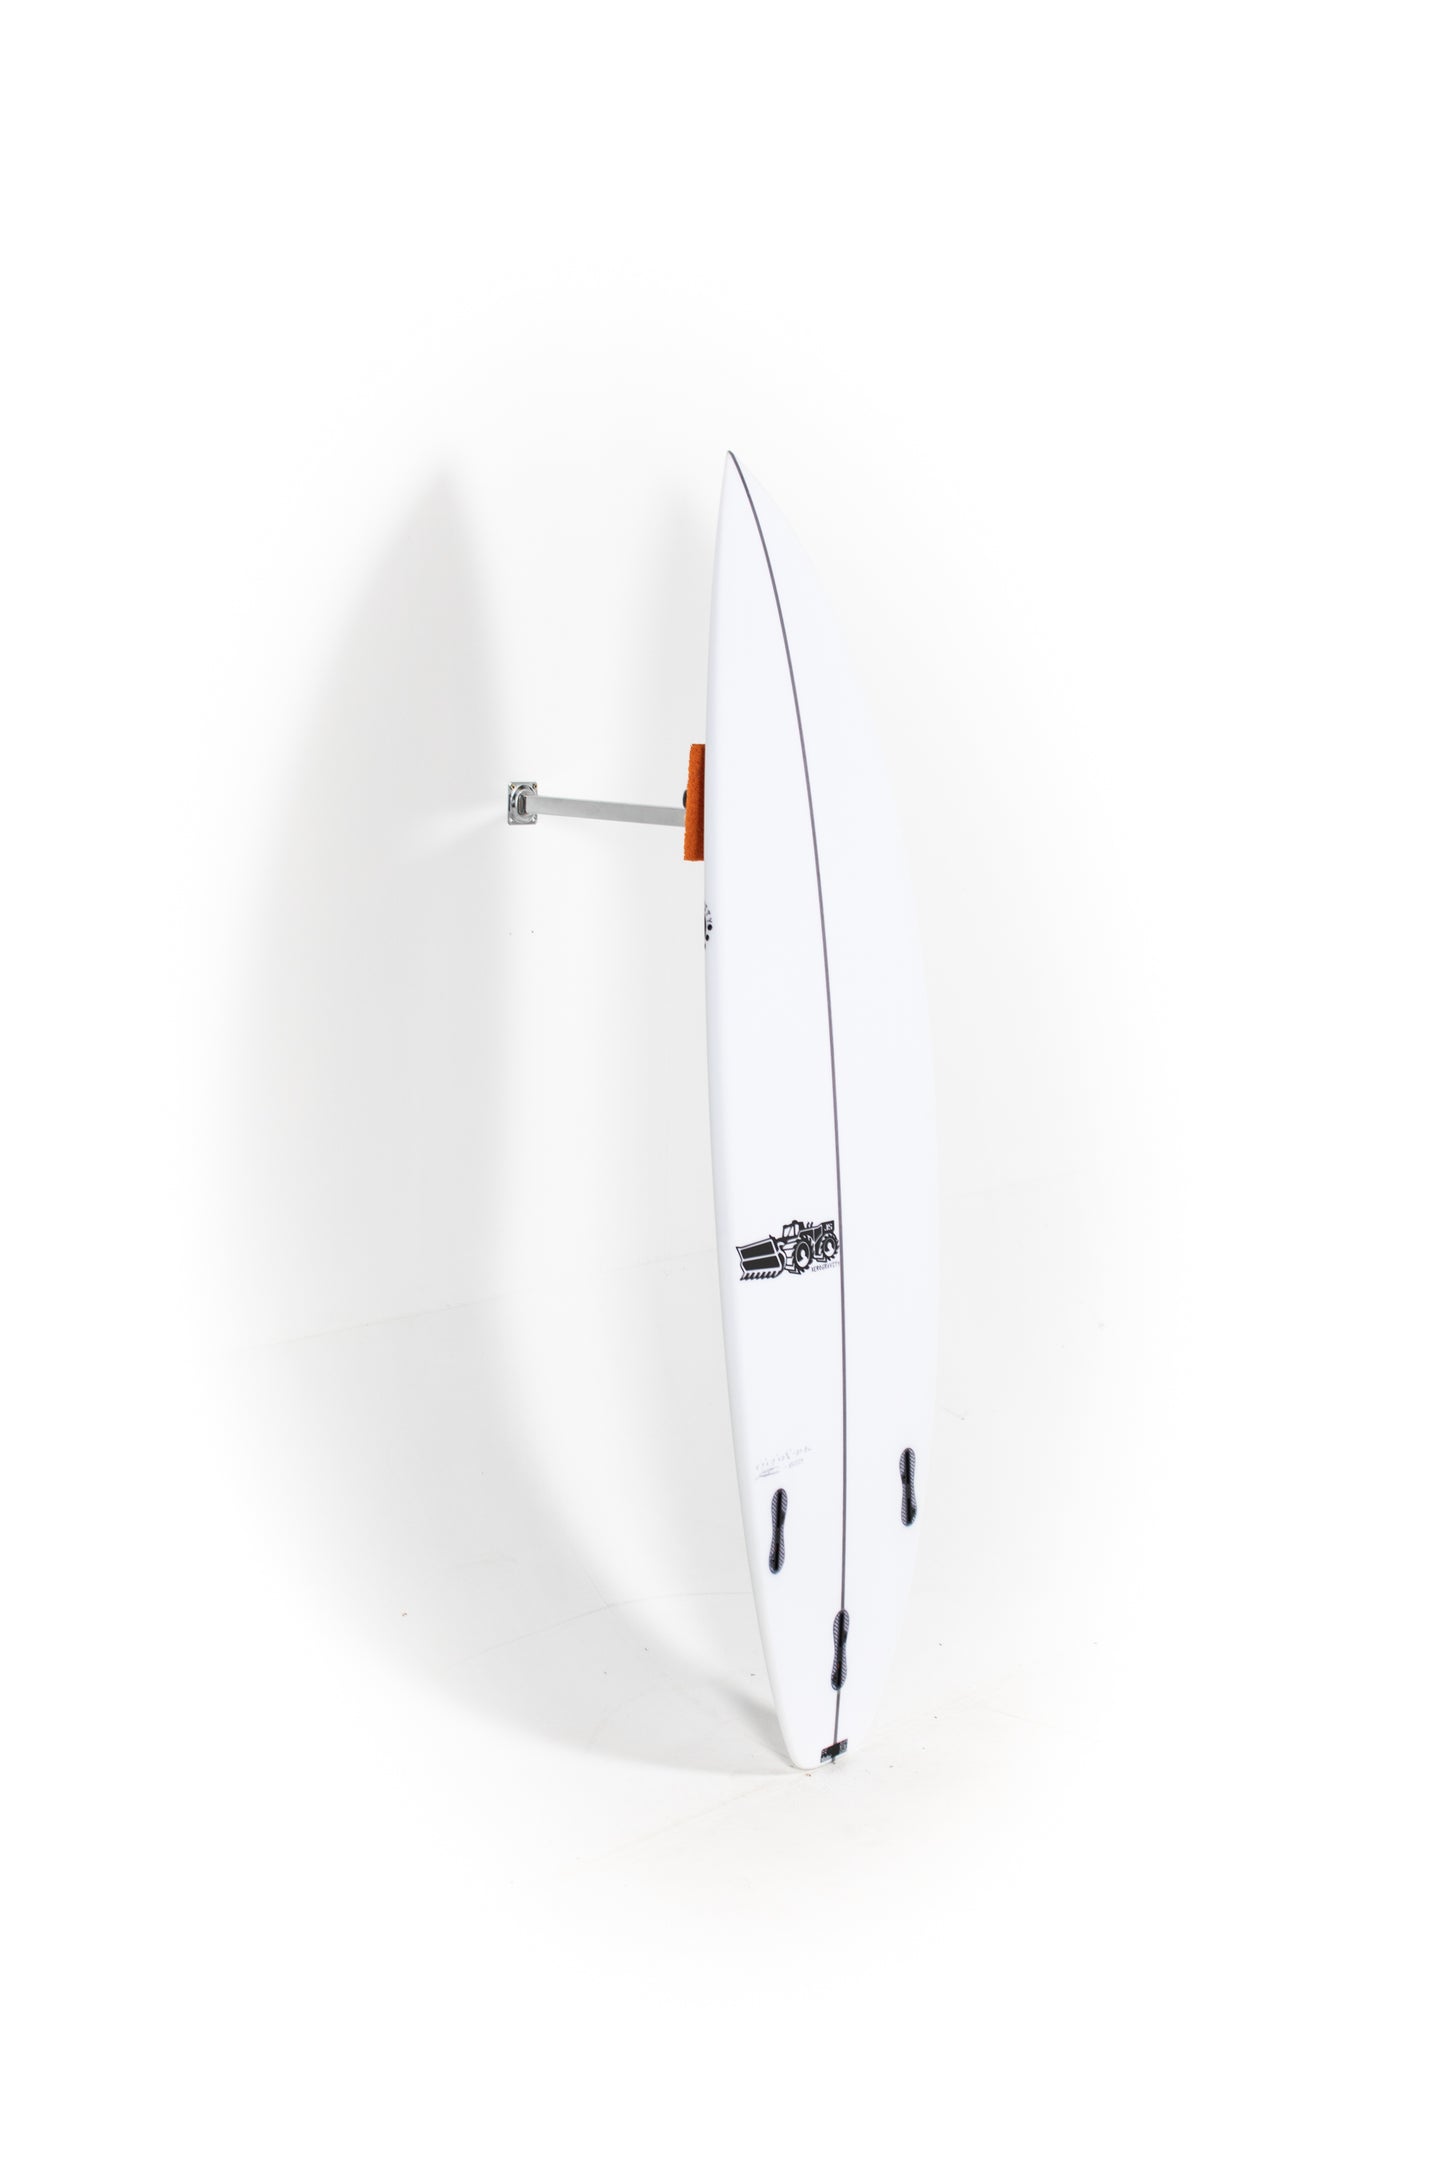 
                  
                    Pukas Surf Shop - JS Surfboards - XERO GRAVITY - 5'9" x 19" x 2.31" x 27L. - XEROGRAVITY
                  
                